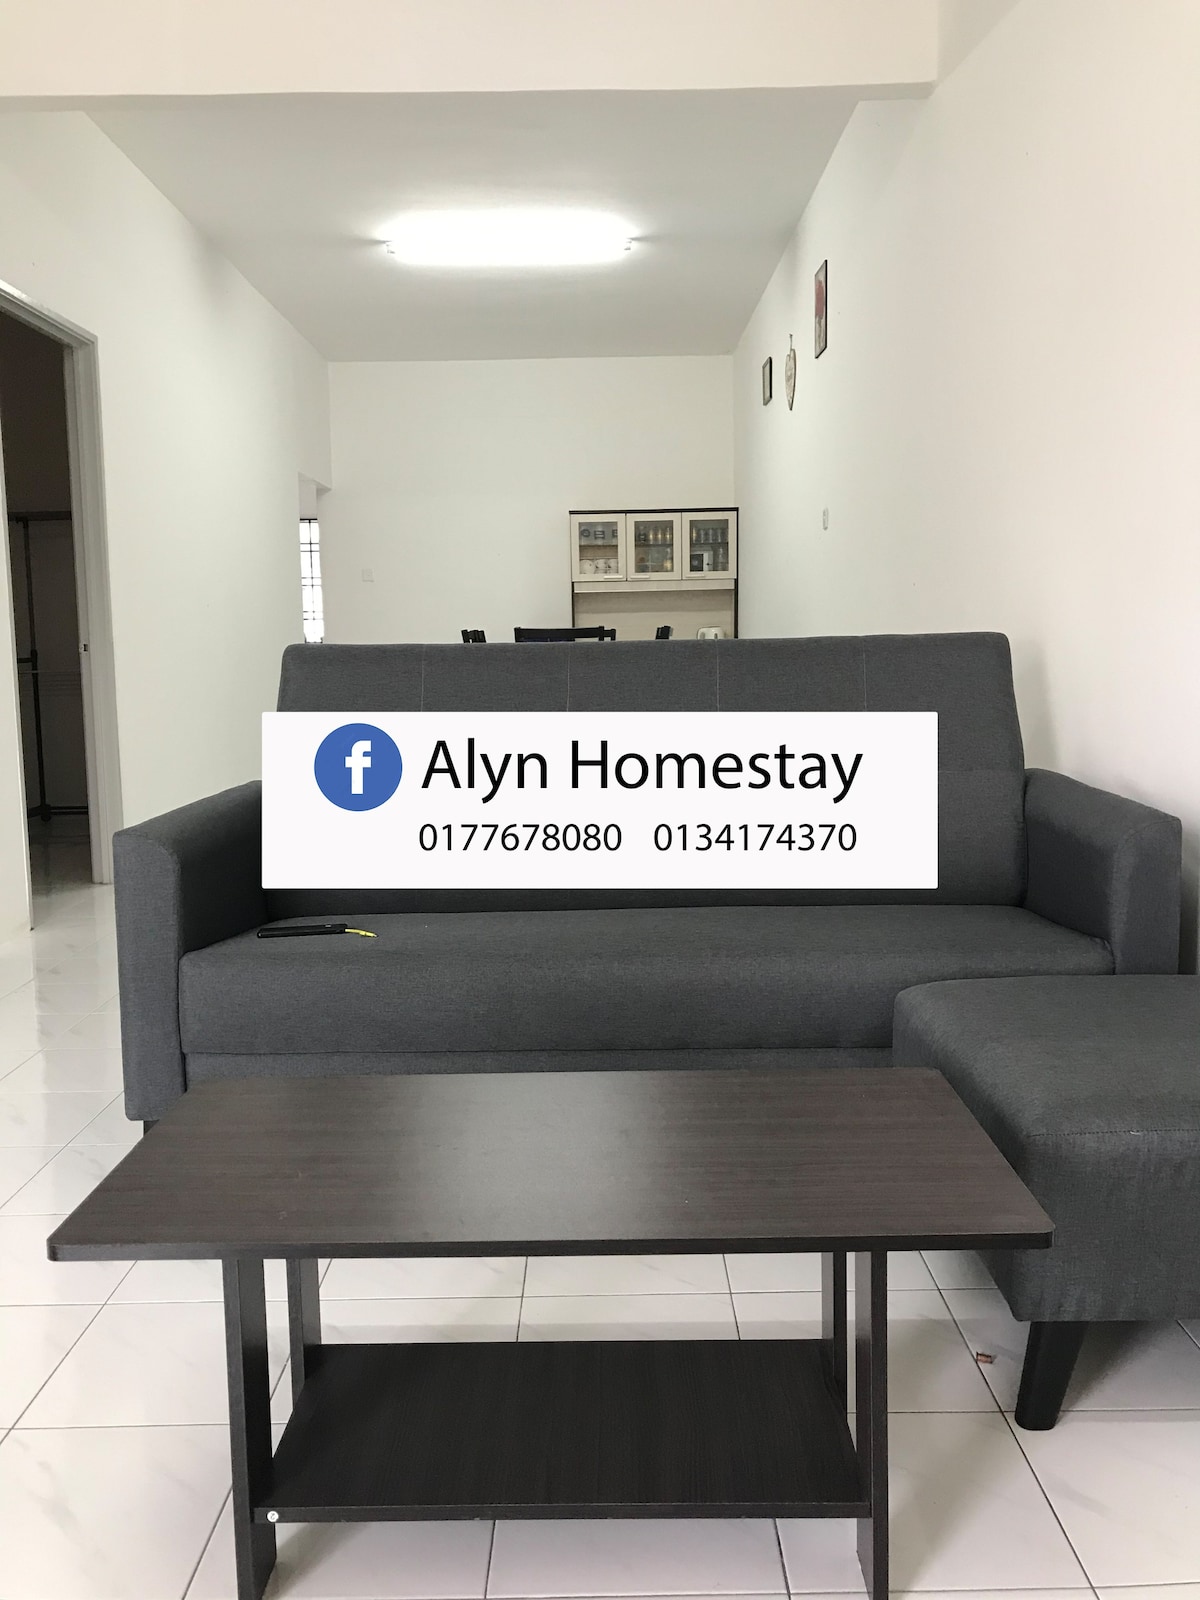 Alyn Homestay Batu Pahat (Free Wifi)